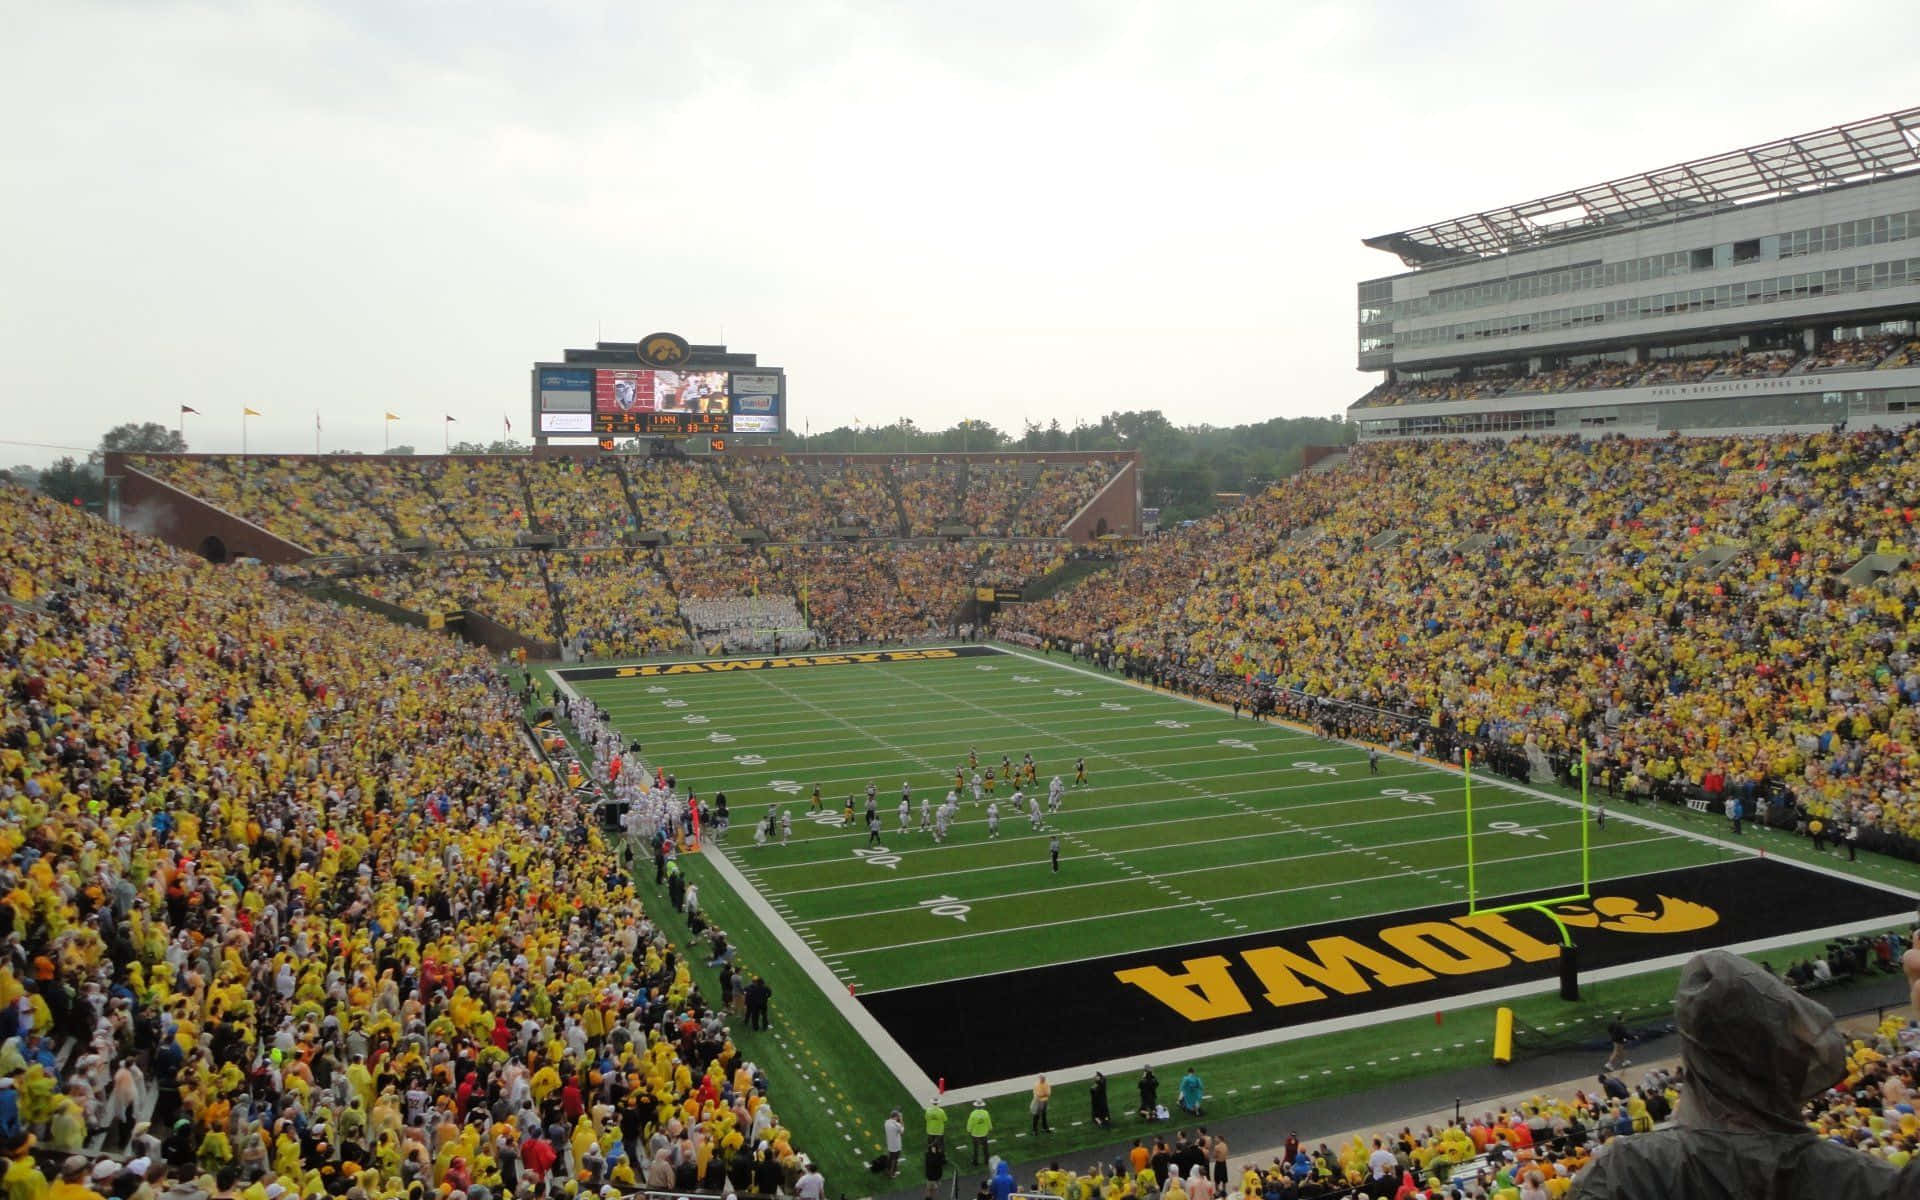 Iowa Football Stadium In A Yellow Field